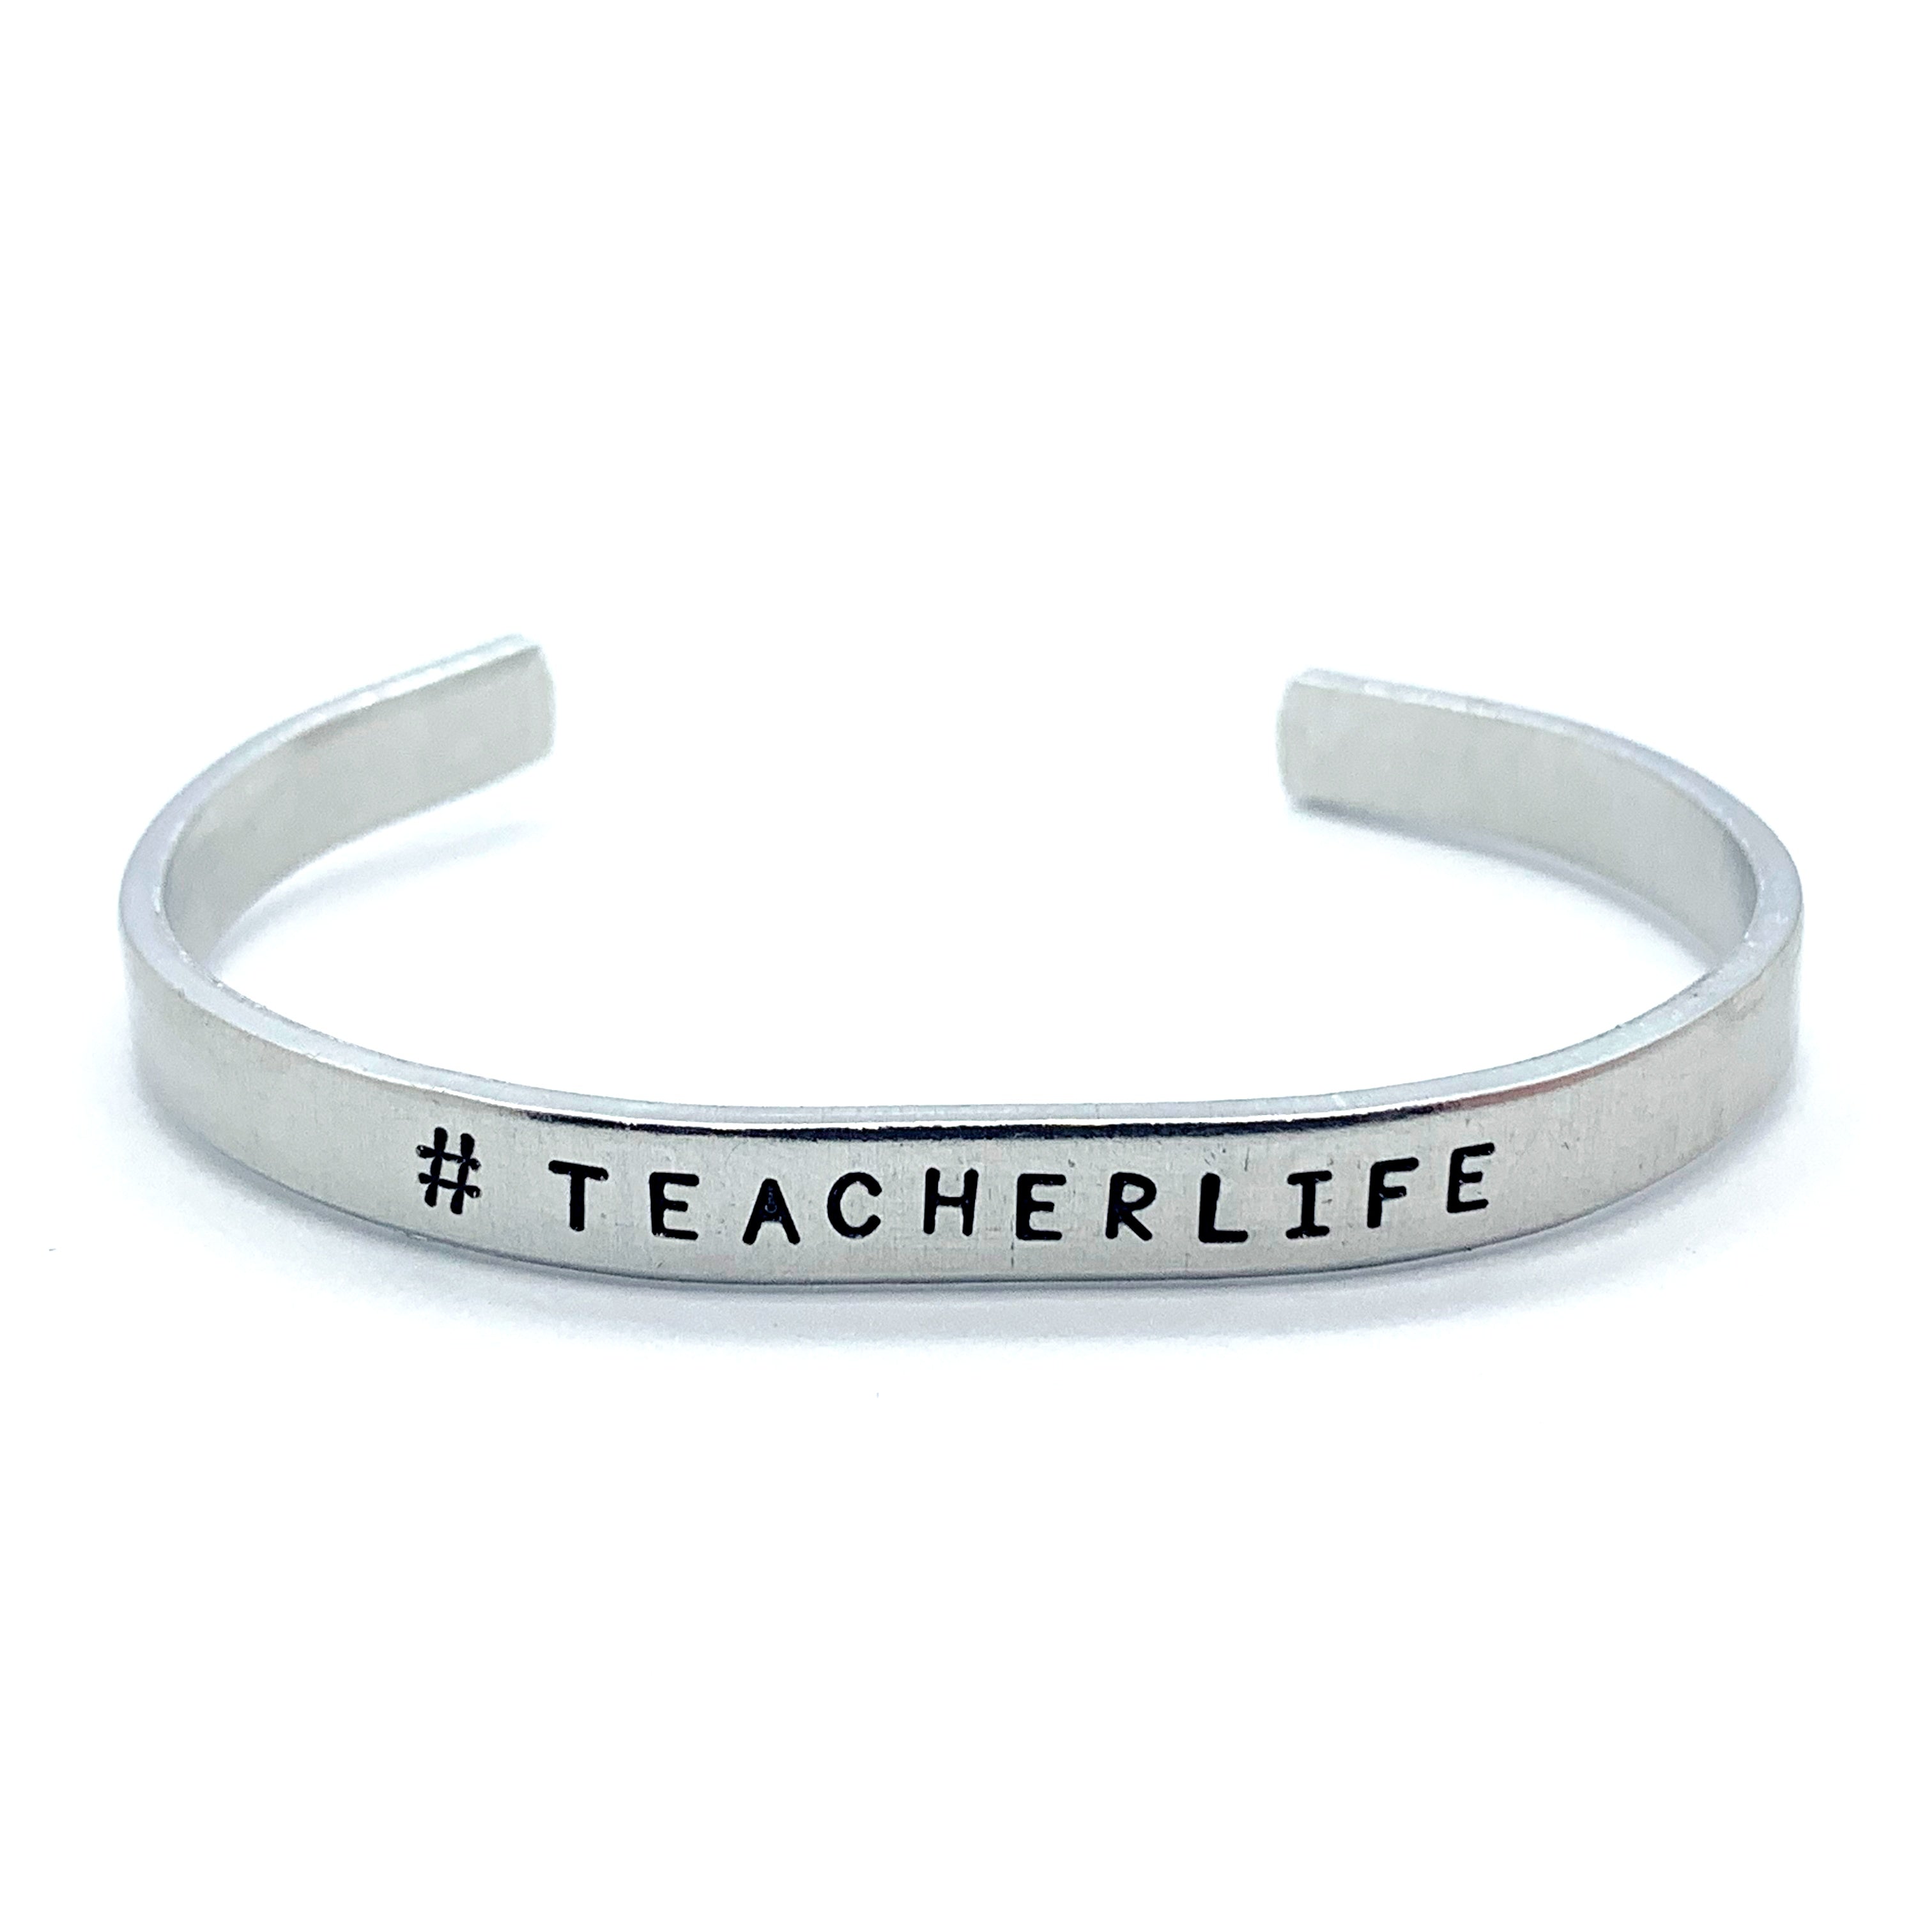 ¼ inch Aluminum Cuff - #Teacherlife